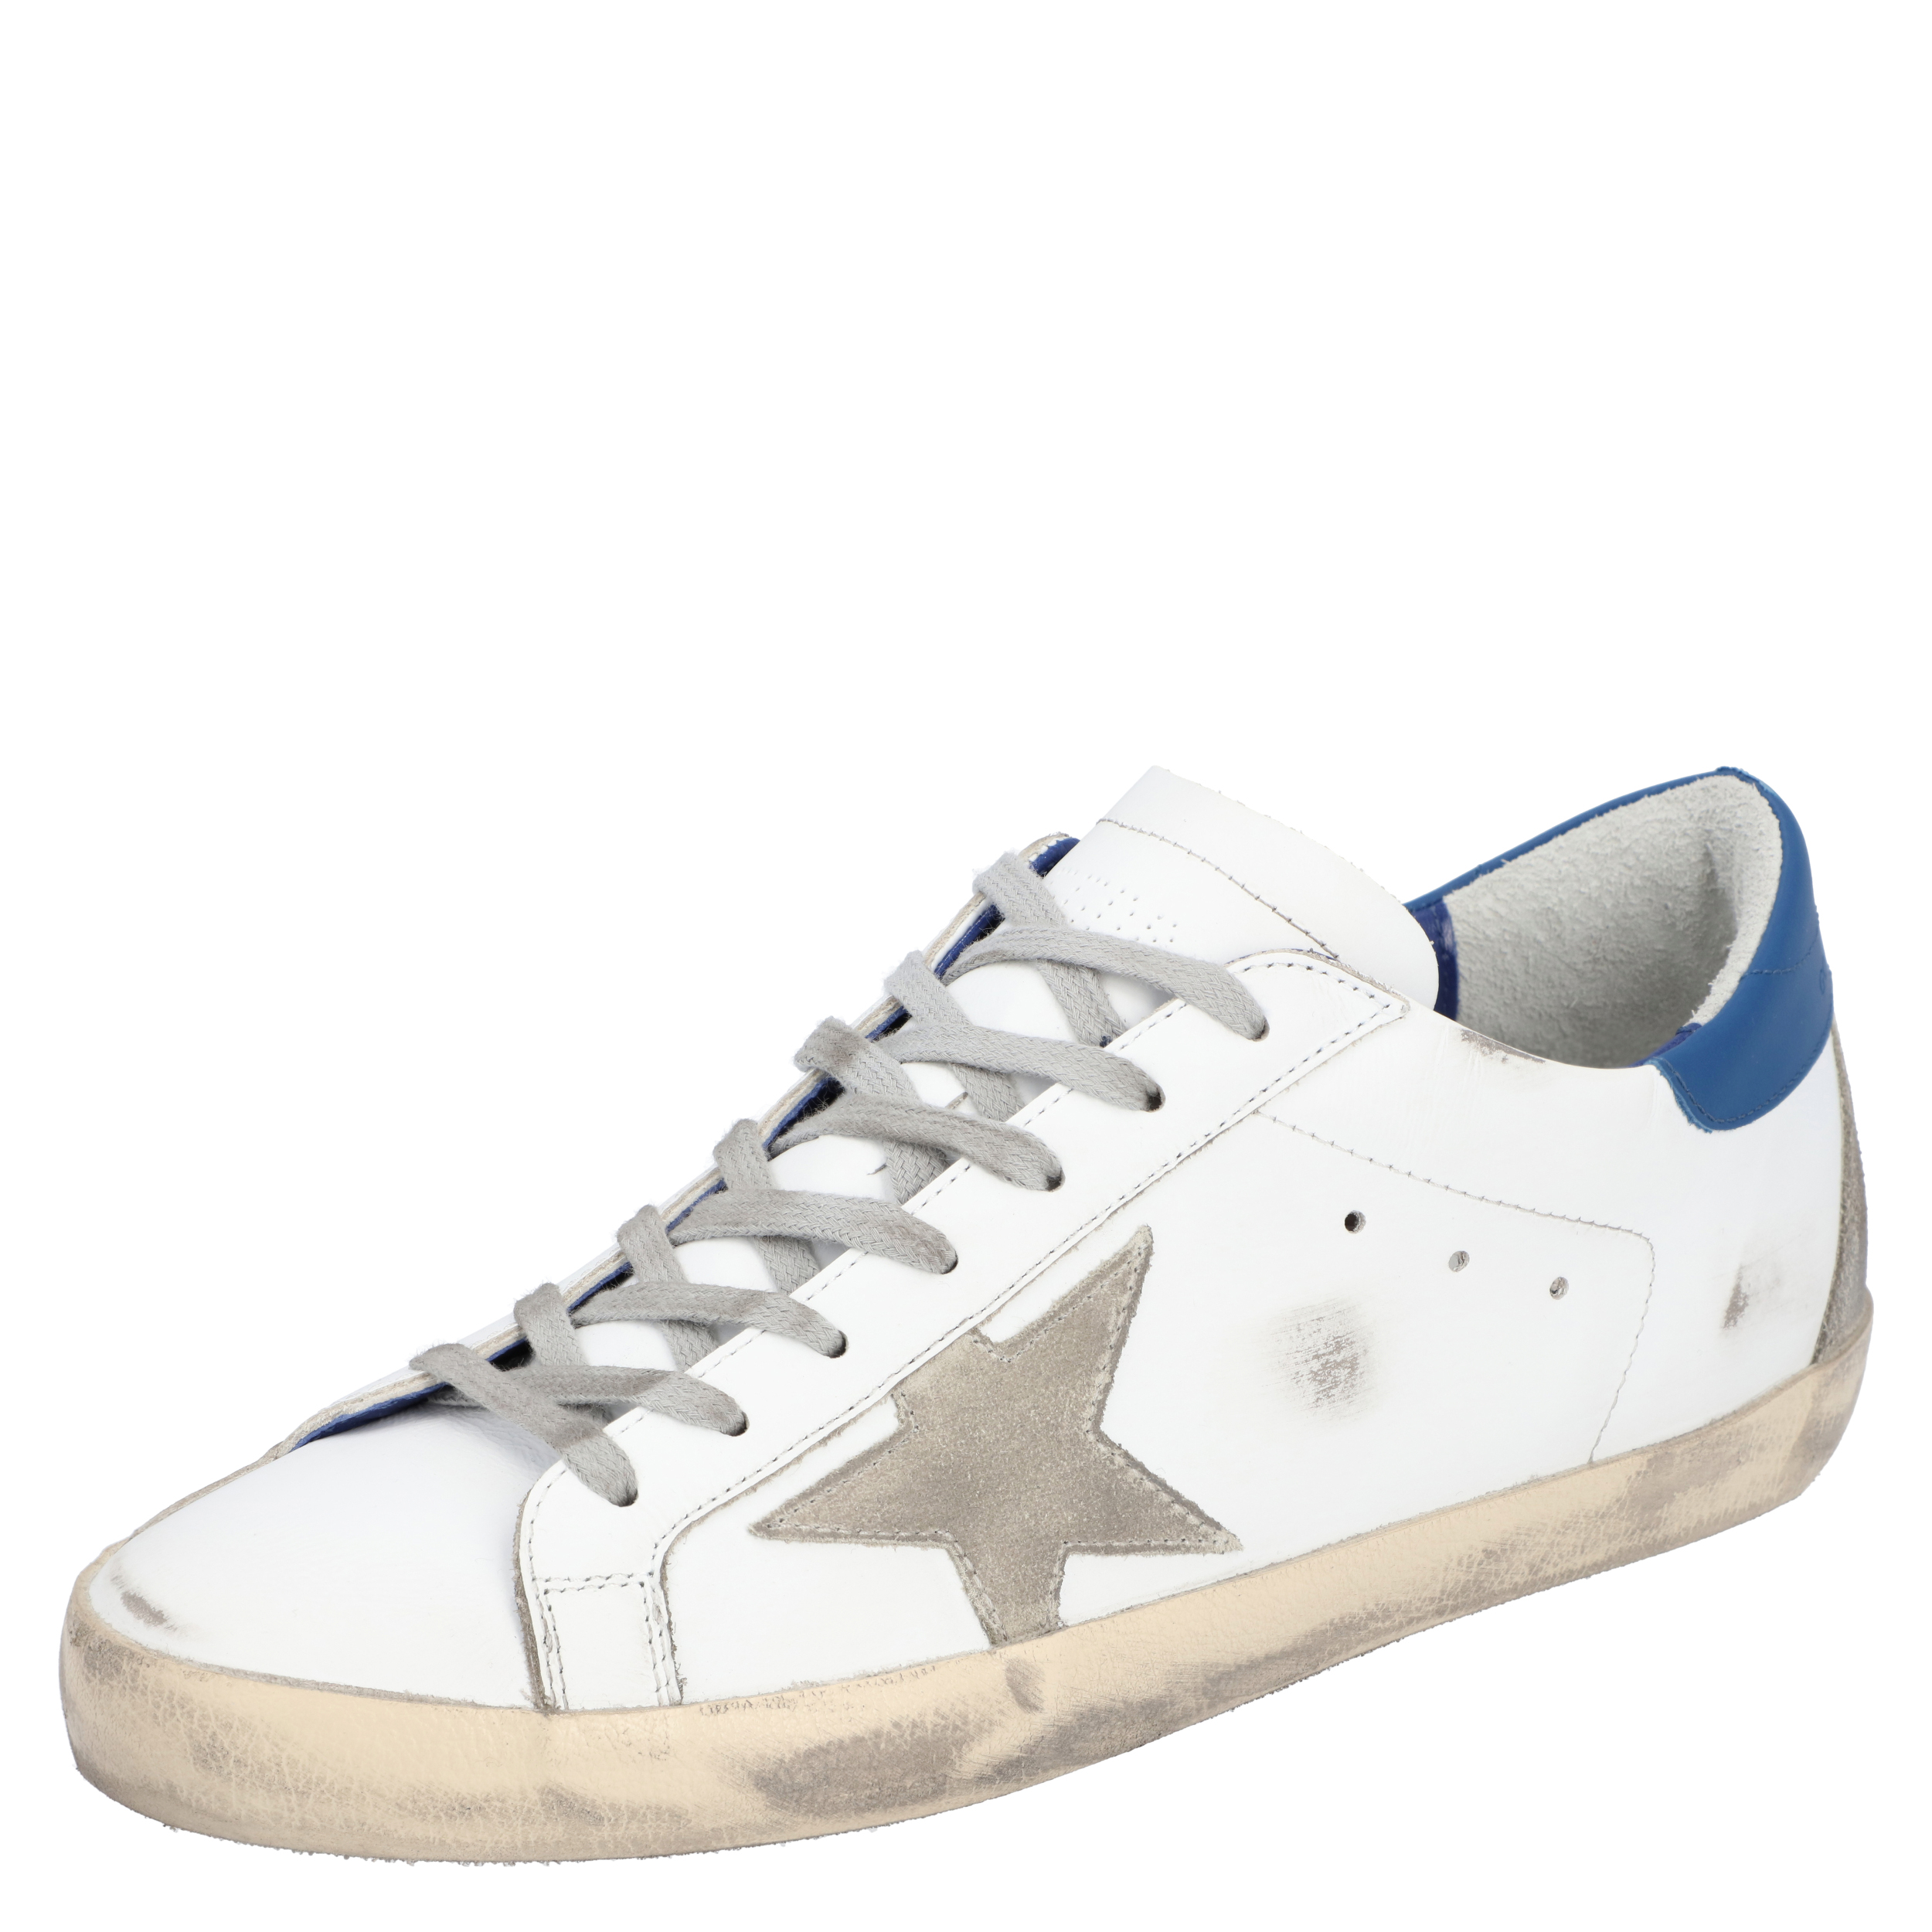 Golden Goose White/Blue Leather Superstar Sneaker Size EU 43